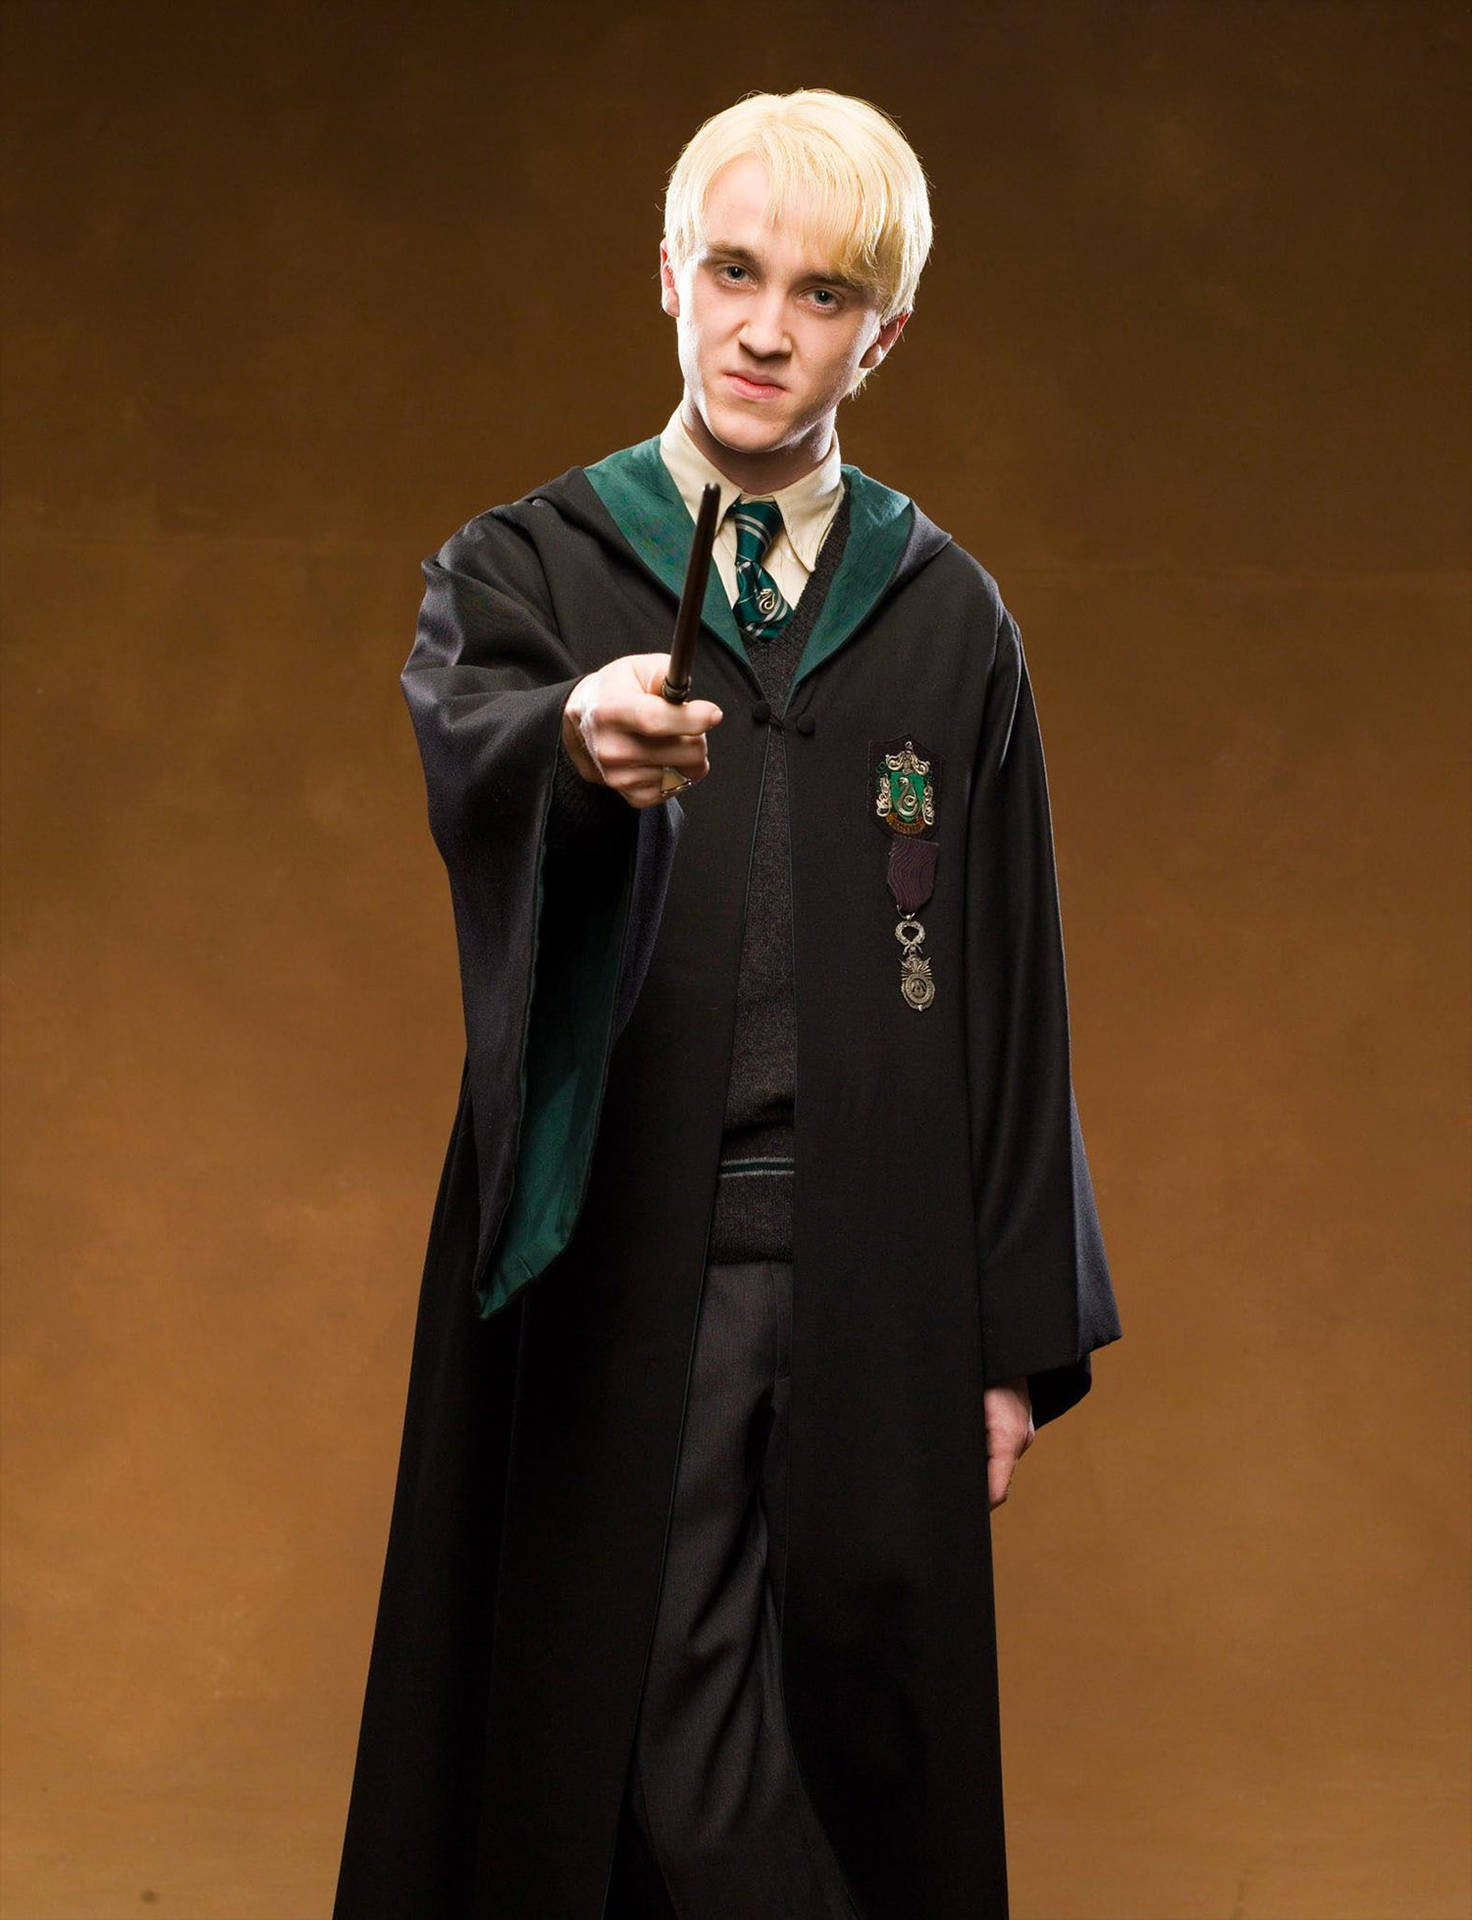 Wizard Draco Malfoy Photoshoot